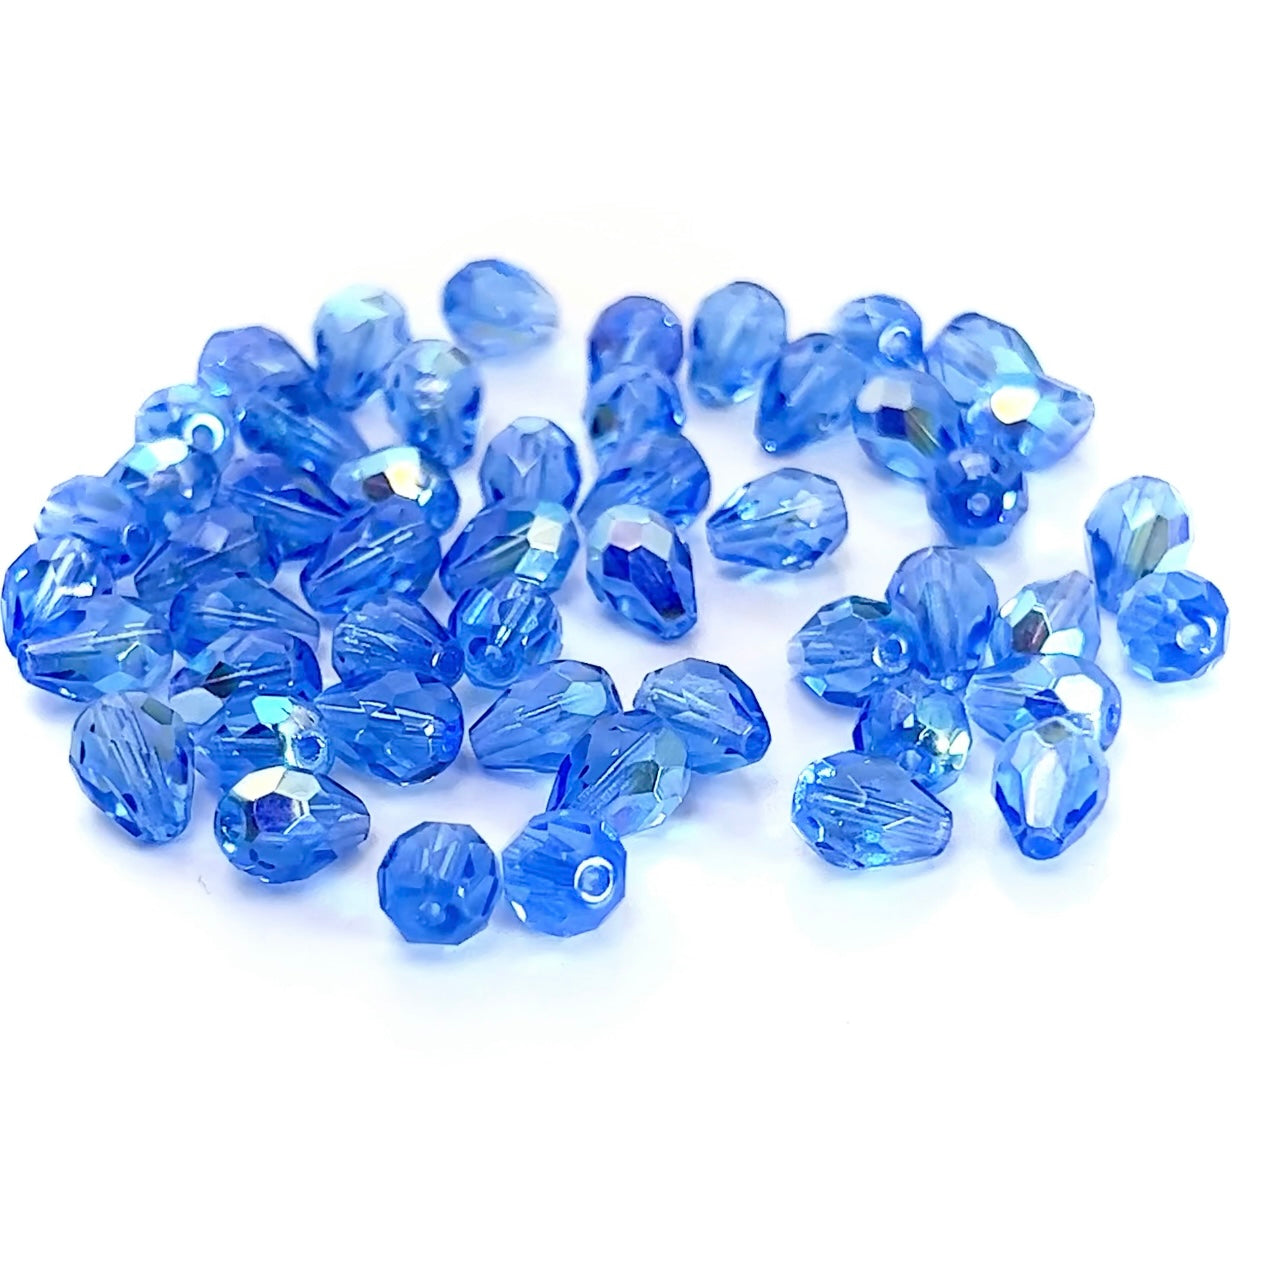 Czech Glass Pear Shaped Fire Polished Beads 9x7mm Sapphire AB coated blue Tear Drops, 50 pieces, J018